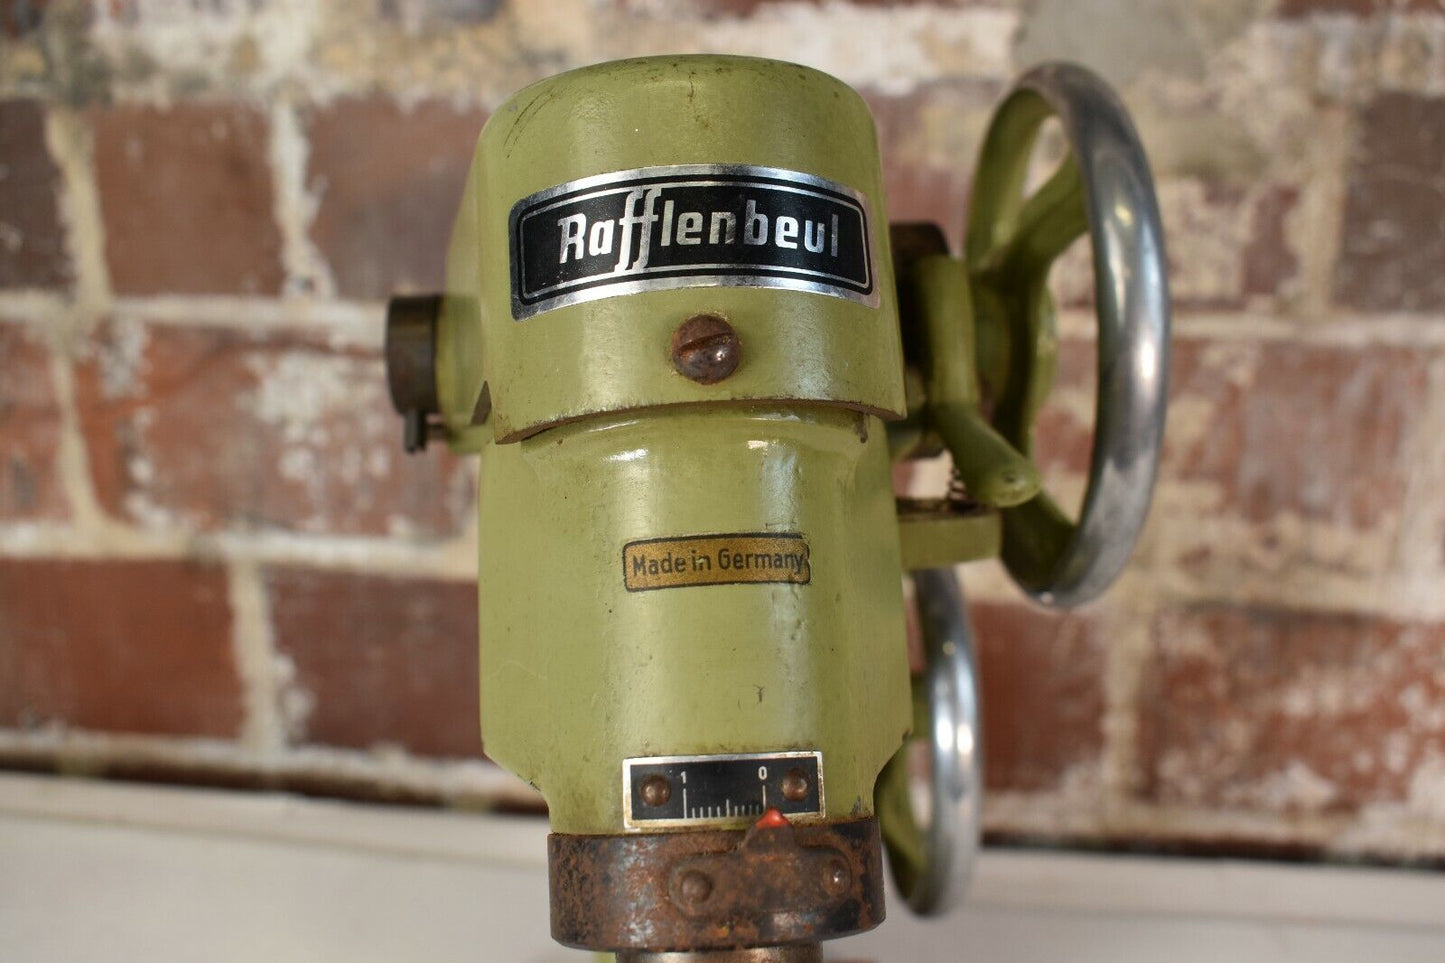 Vintage Eupedus Rafflenbeul Shoe Stretcher, Made in Germany